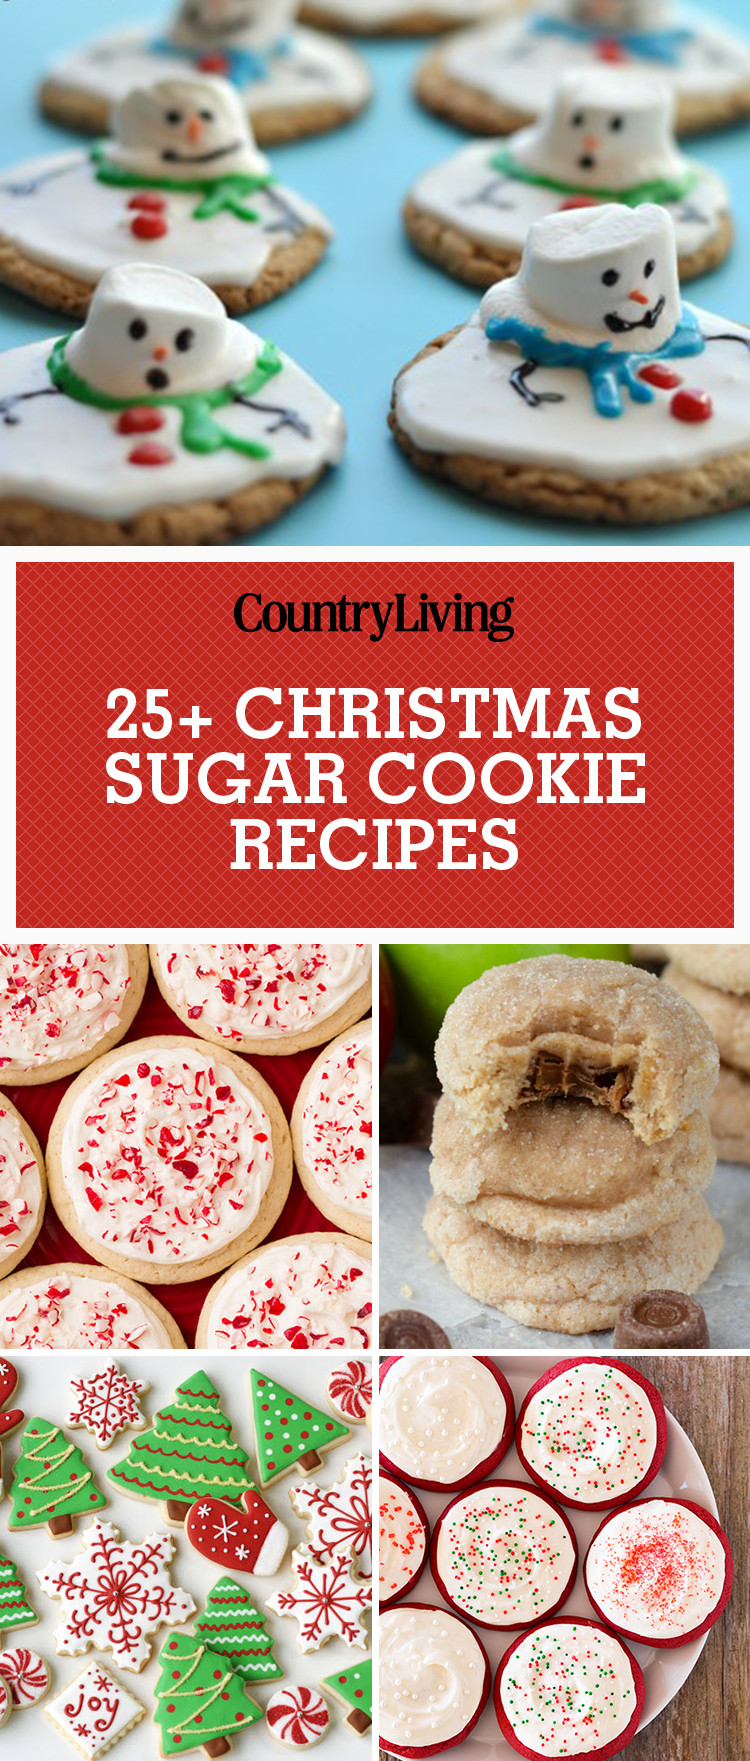 Easy Christmas Sugar Cookies
 25 Easy Christmas Sugar Cookies Recipes & Decorating